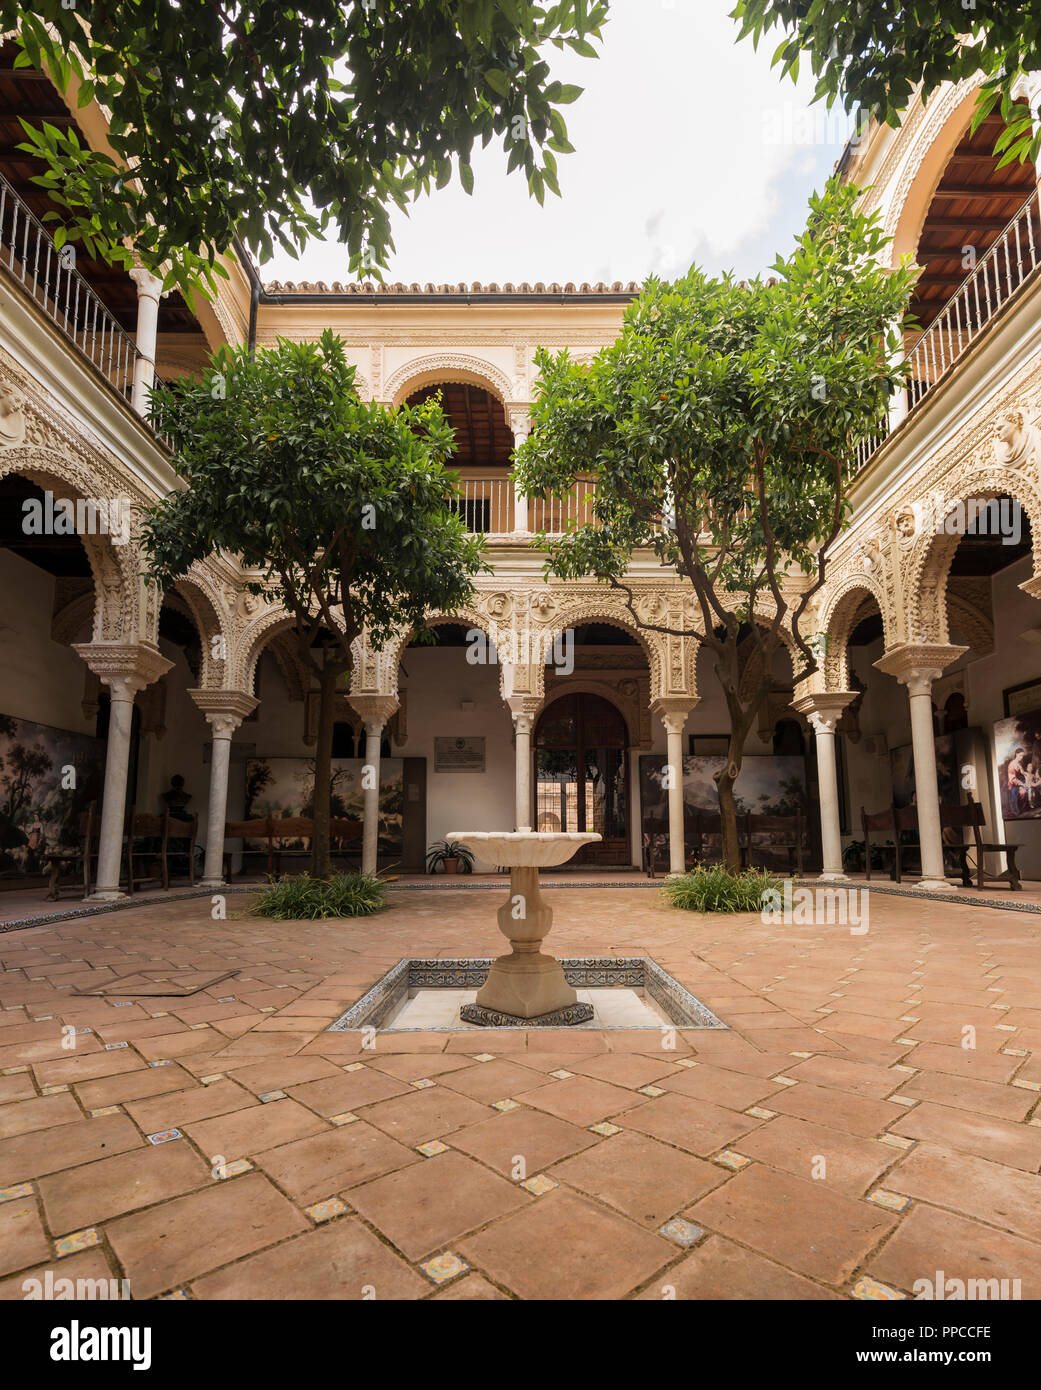 Courtyard with portico, Arabic architecture, Casa de los Pinelo, Andalusia, Spain Stock Photo